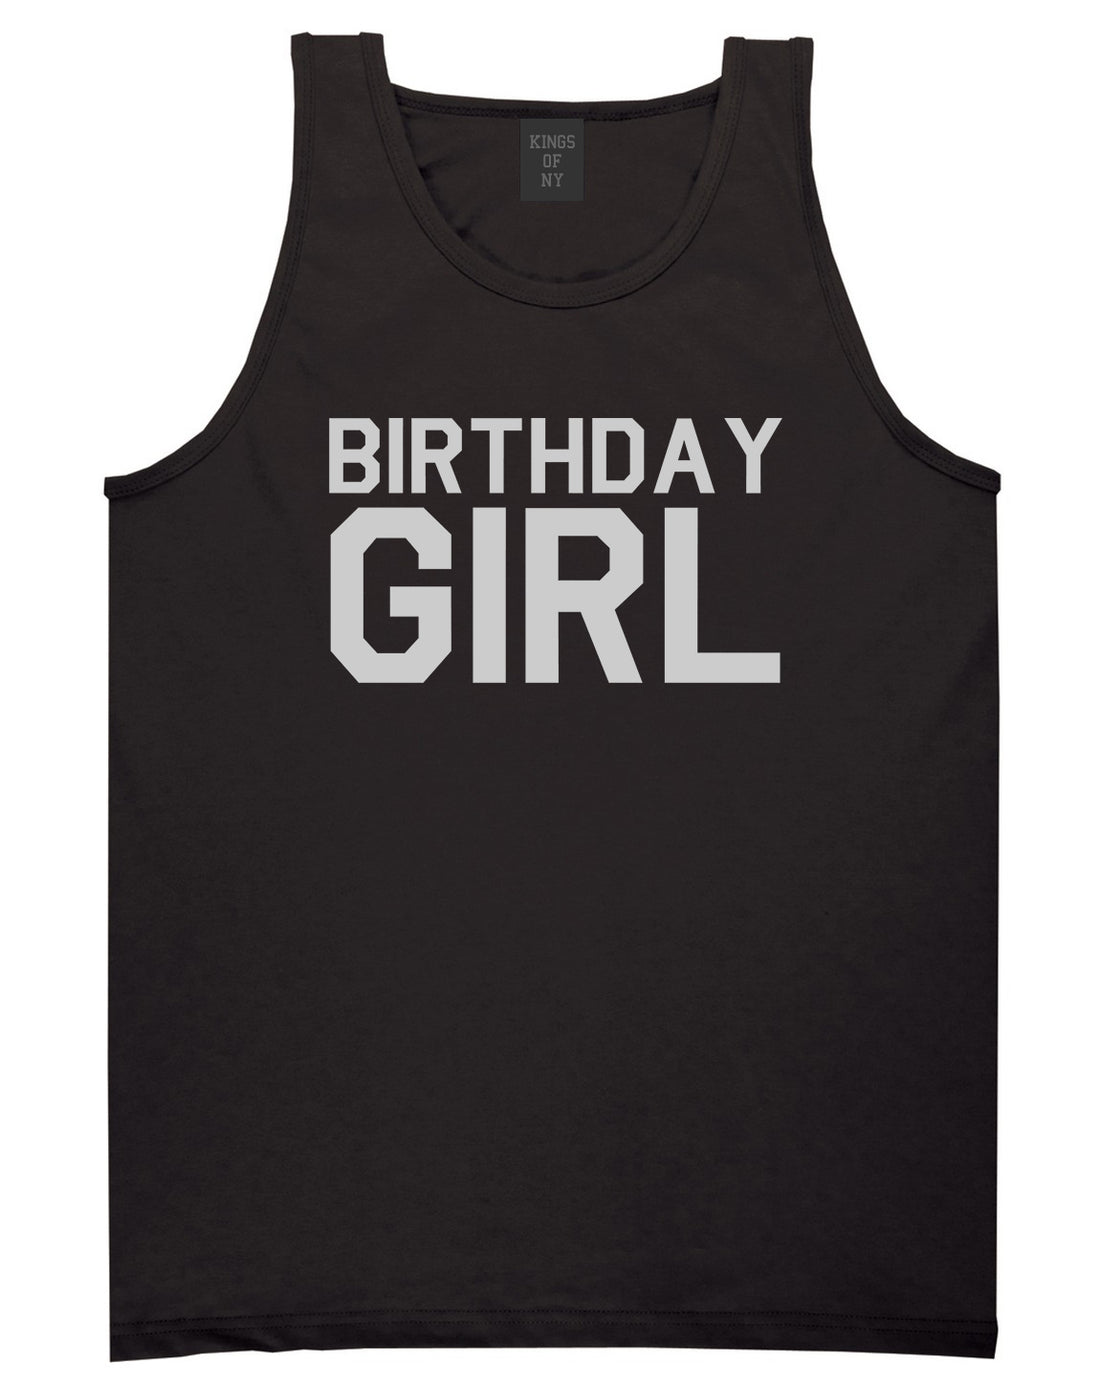 Birthday Girl Black Tank Top Shirt by Kings Of NY